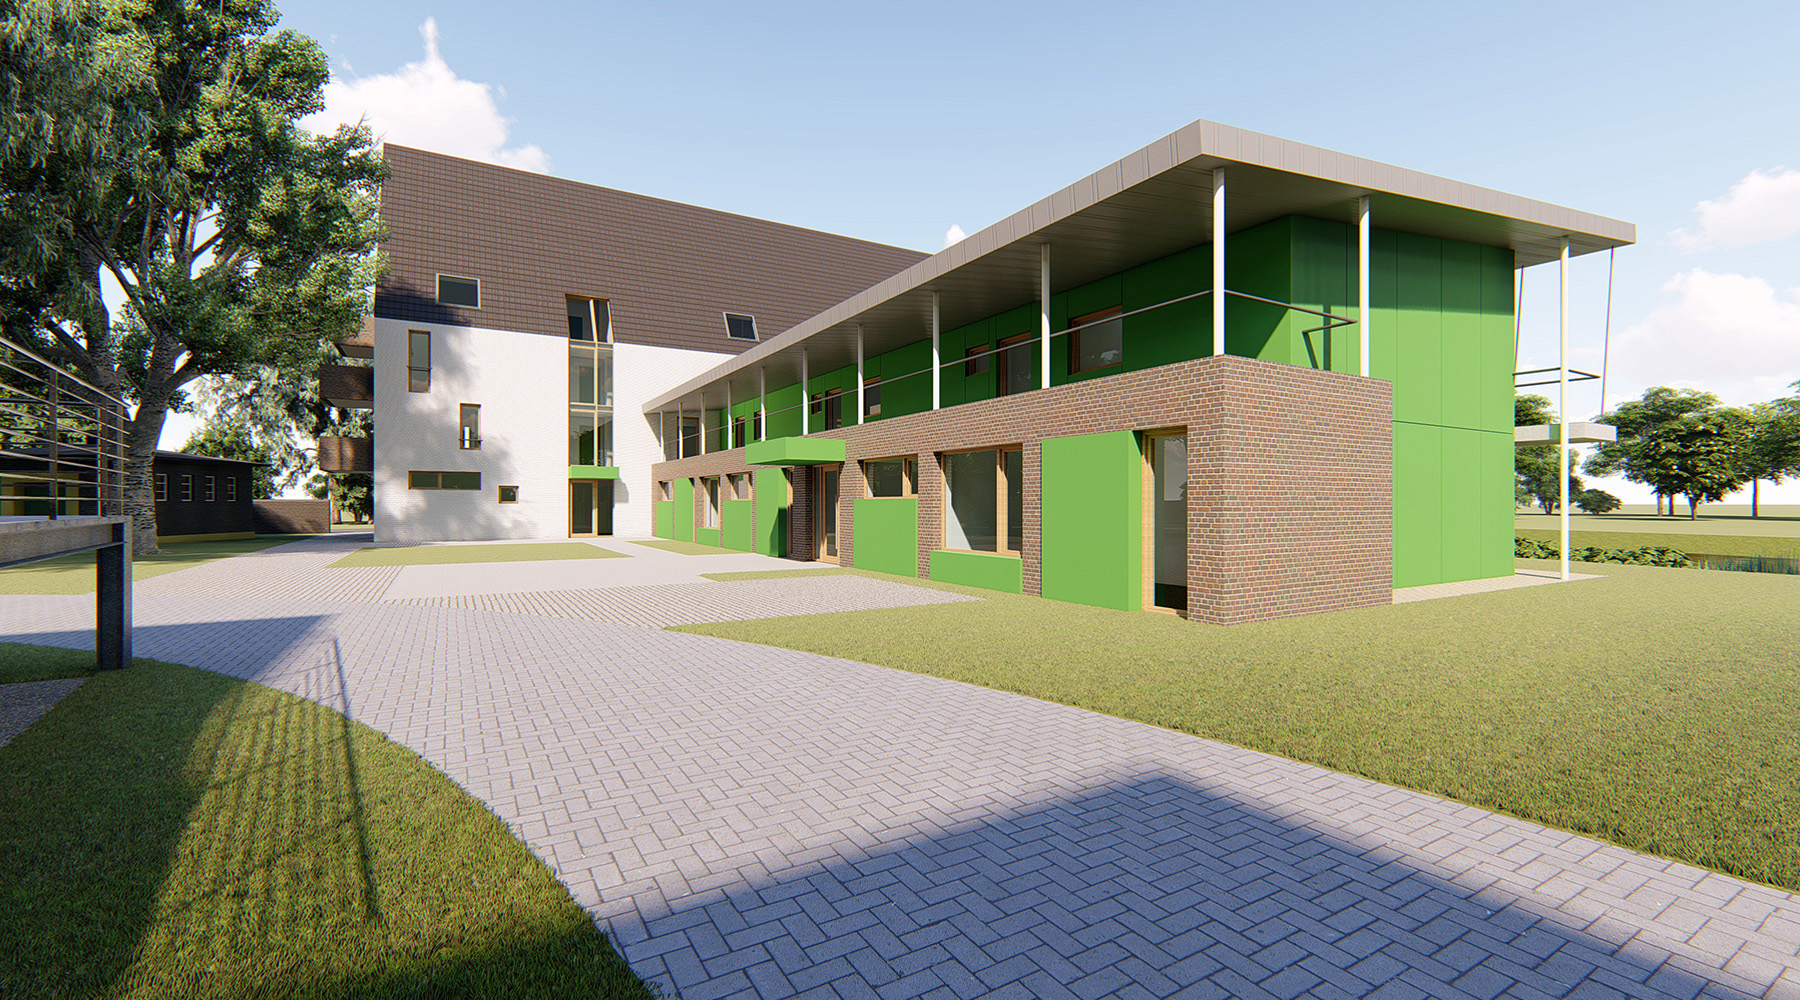 Altenpflegeheim in Aachen. 3D-CAD-Modell Seitenansicht. Grünes Gebäude mit Klinkerfassade am Erdgeschoss.